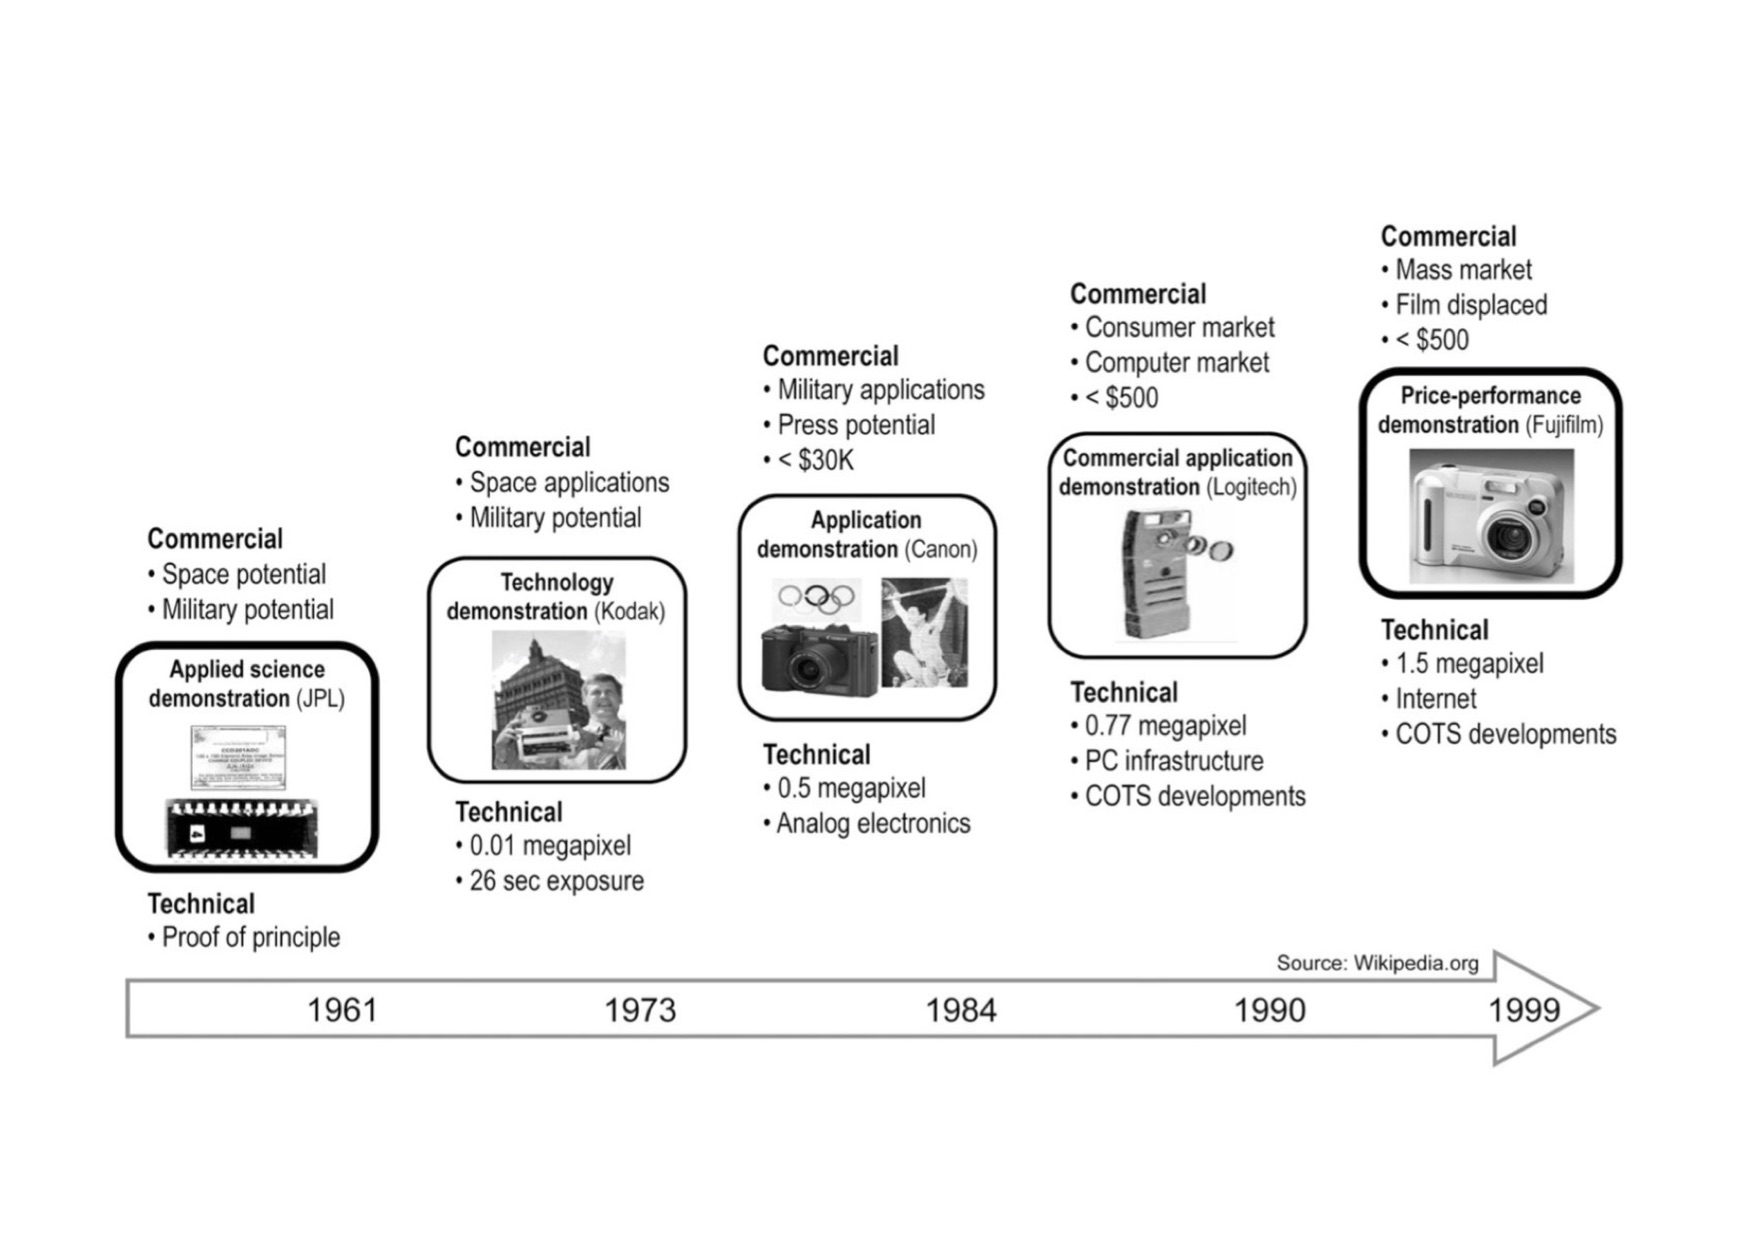  Simplified communication roadmap format (retrospective roadmap for digital camera, Phaal et al., 2012) 